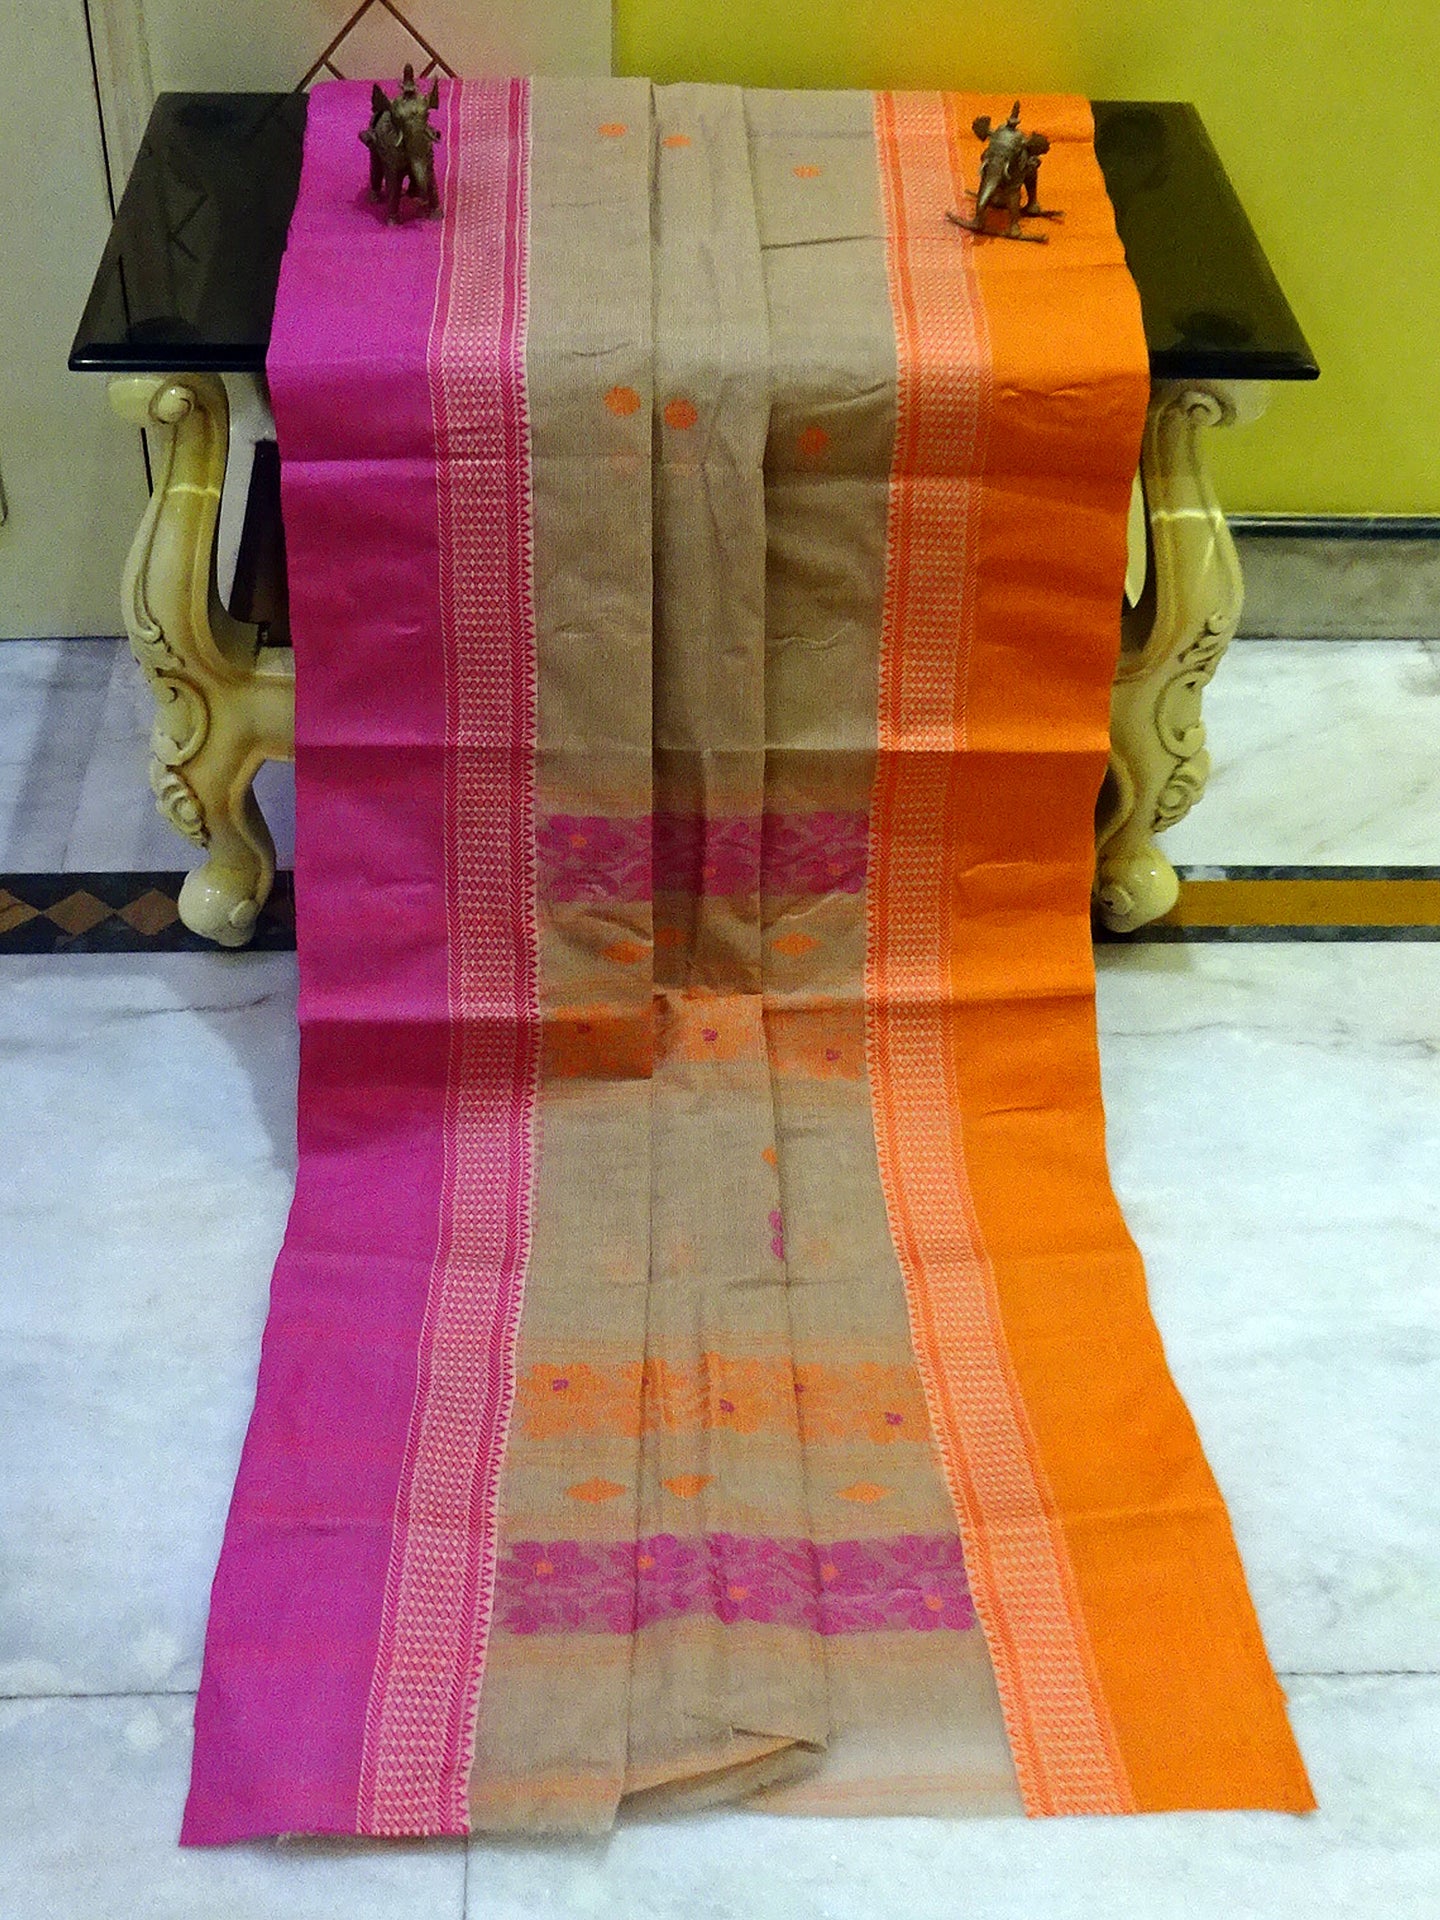 Bengal Handloom Cotton Bomkai Saree in Tan Brown, Lilac Pink and Diffuse Orange